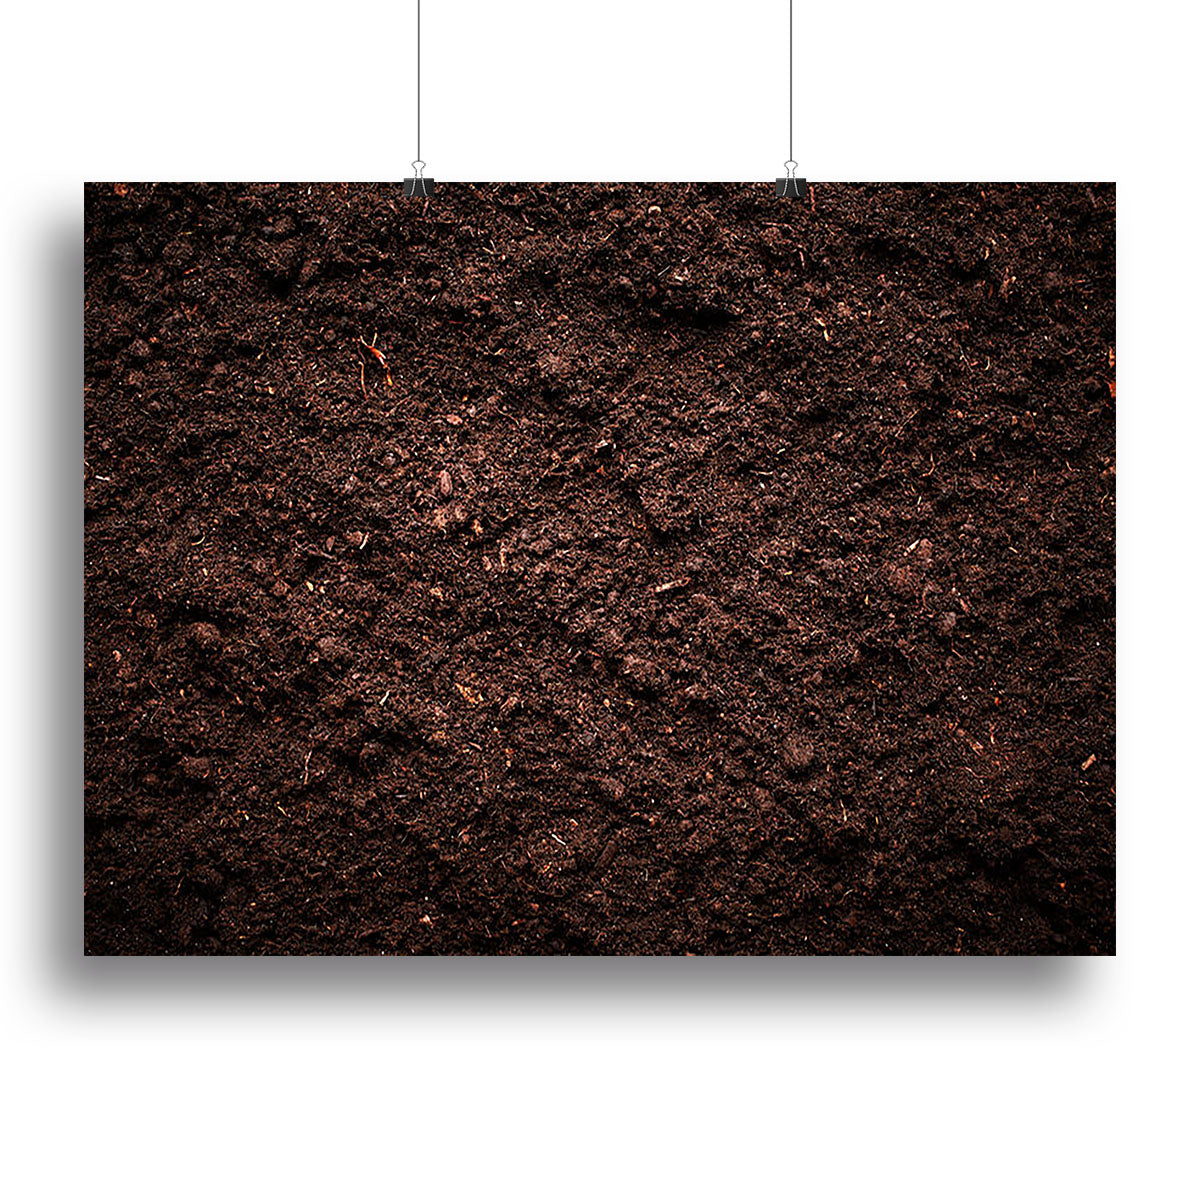 Soil texture Canvas Print or Poster - Canvas Art Rocks - 2